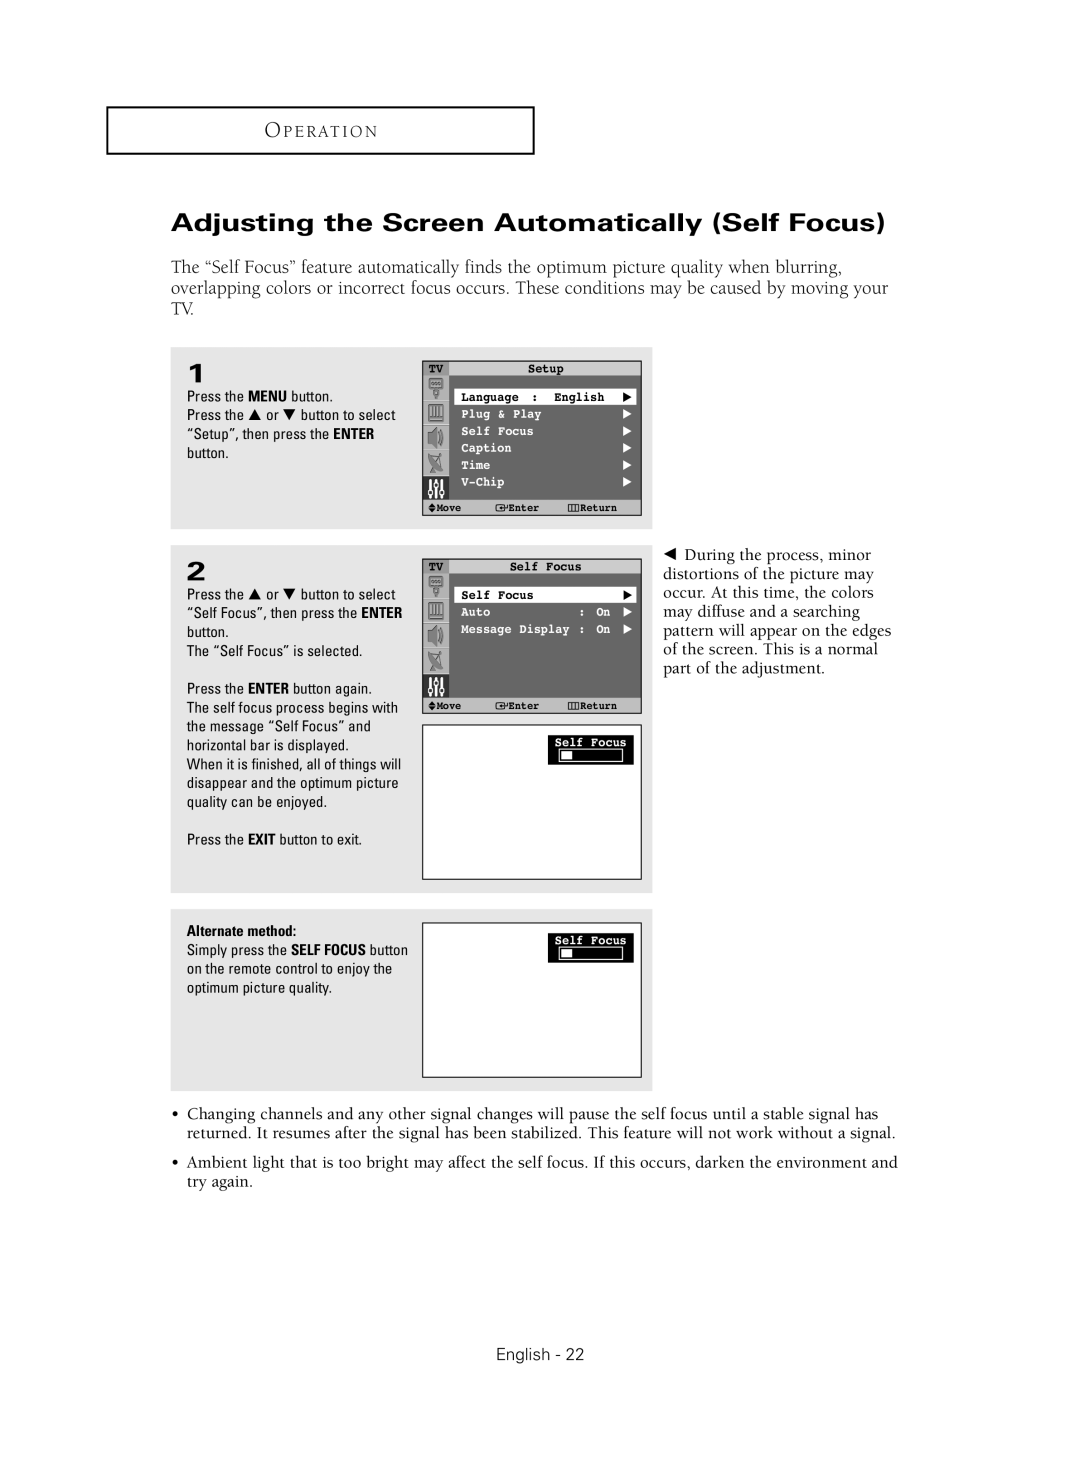 Samsung HC-P4241W manual Adjusting the Screen Automatically Self Focus, Alternate method 